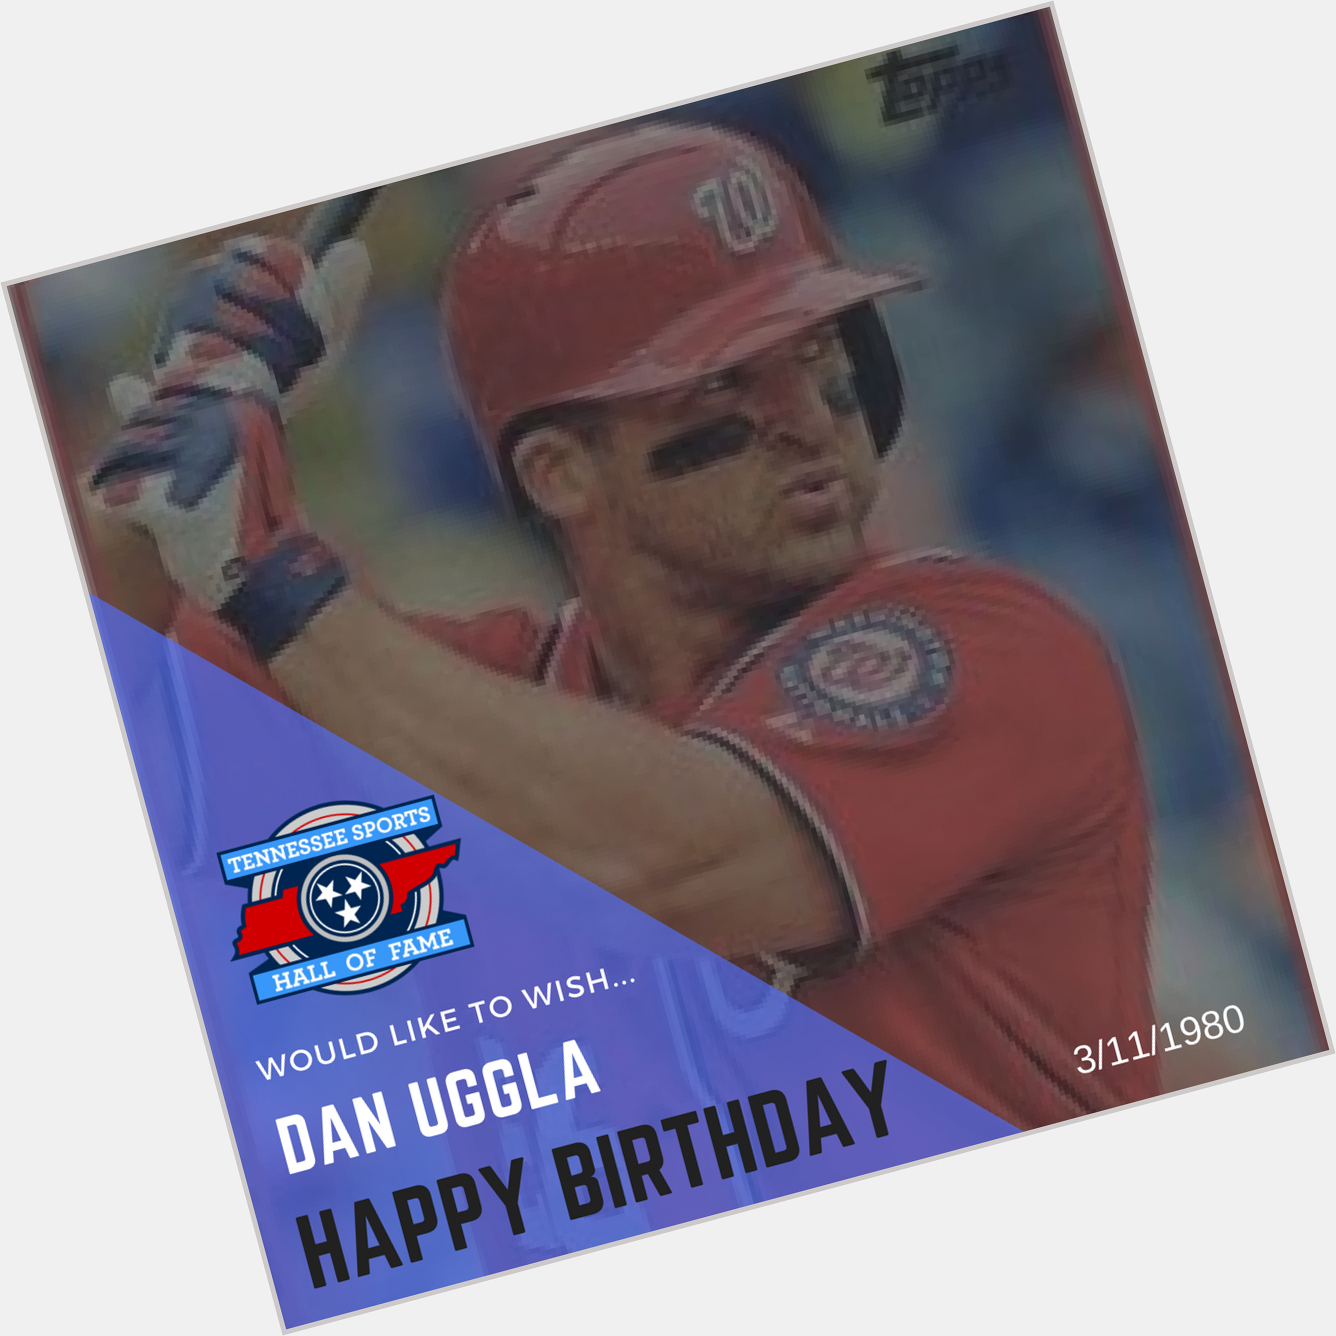 The would like to wish a Happy Birthday to Dan Uggla! 